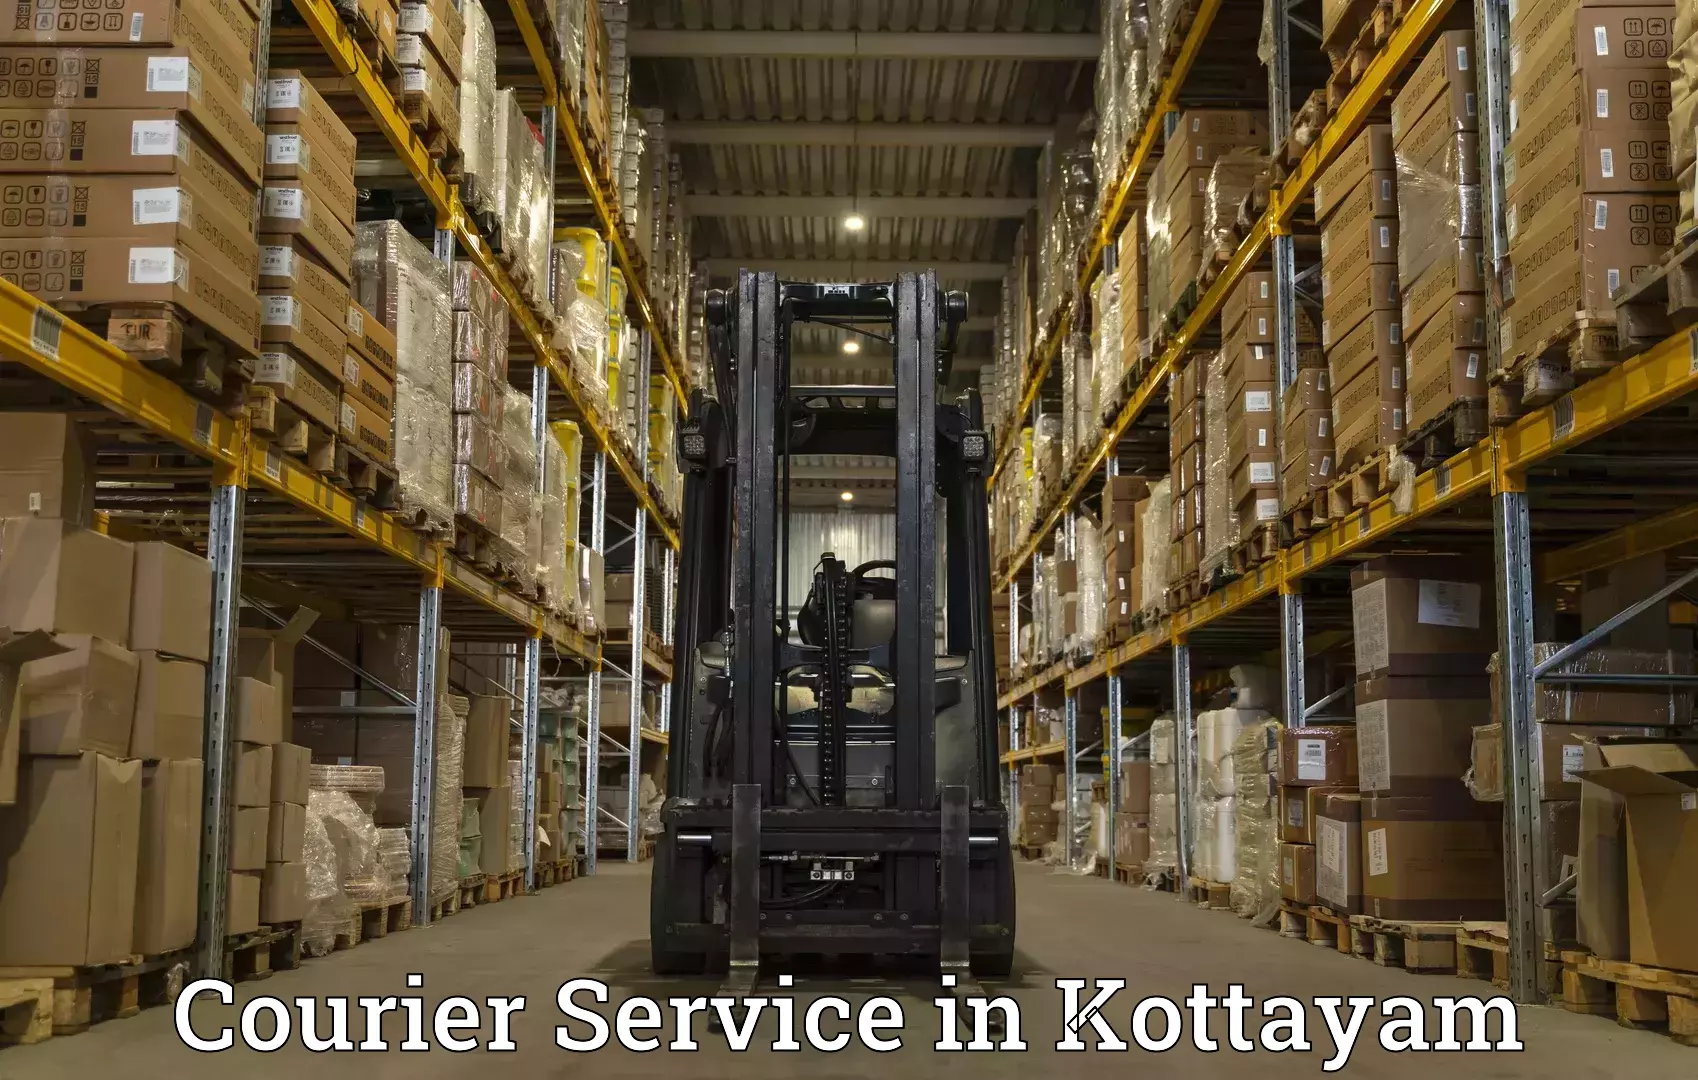 Parcel service for businesses in Kottayam